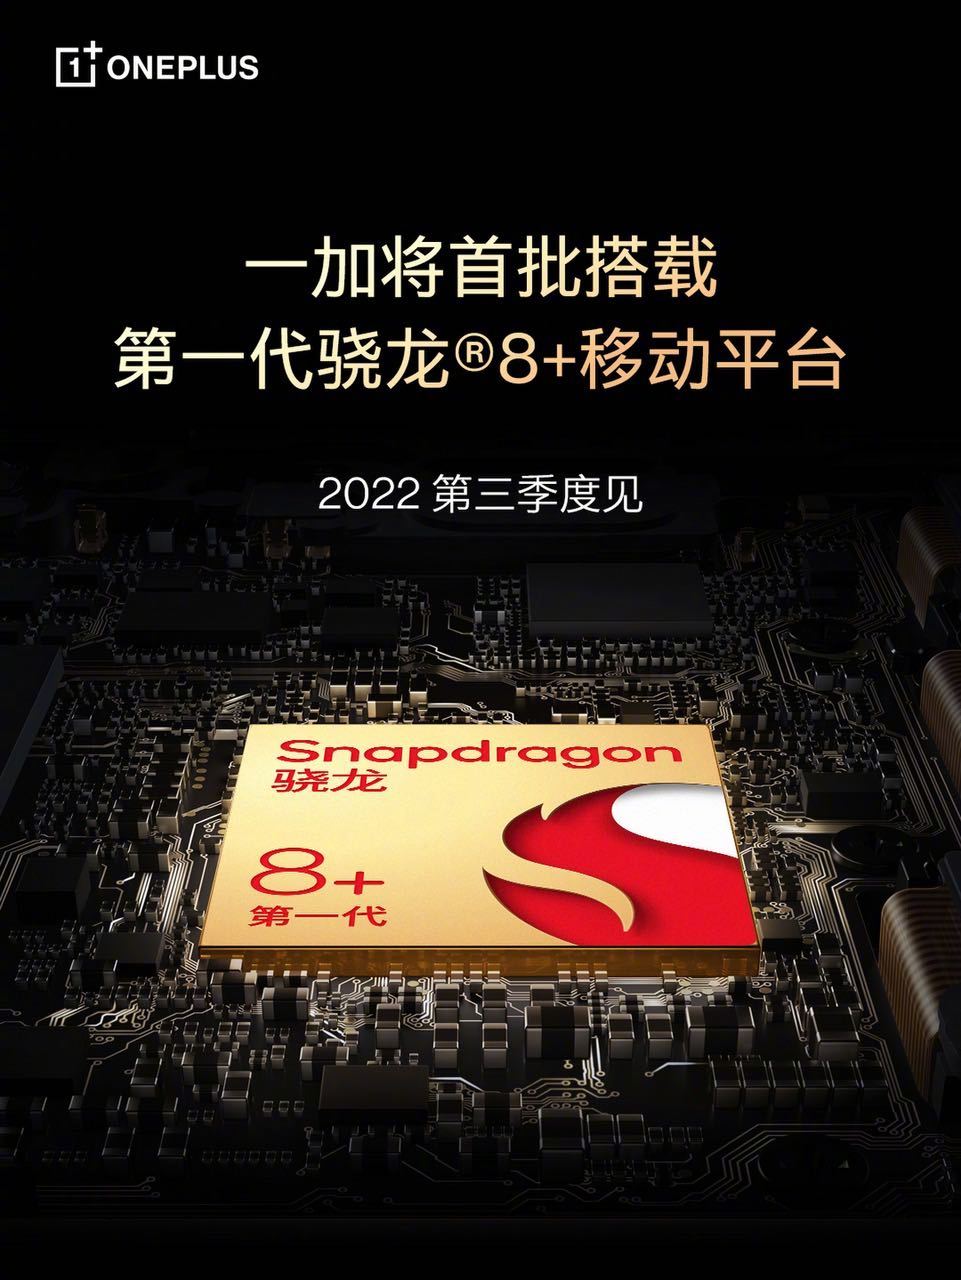 OnePlus 10 Ultra Snapdragon 8 Gen 1 Plus